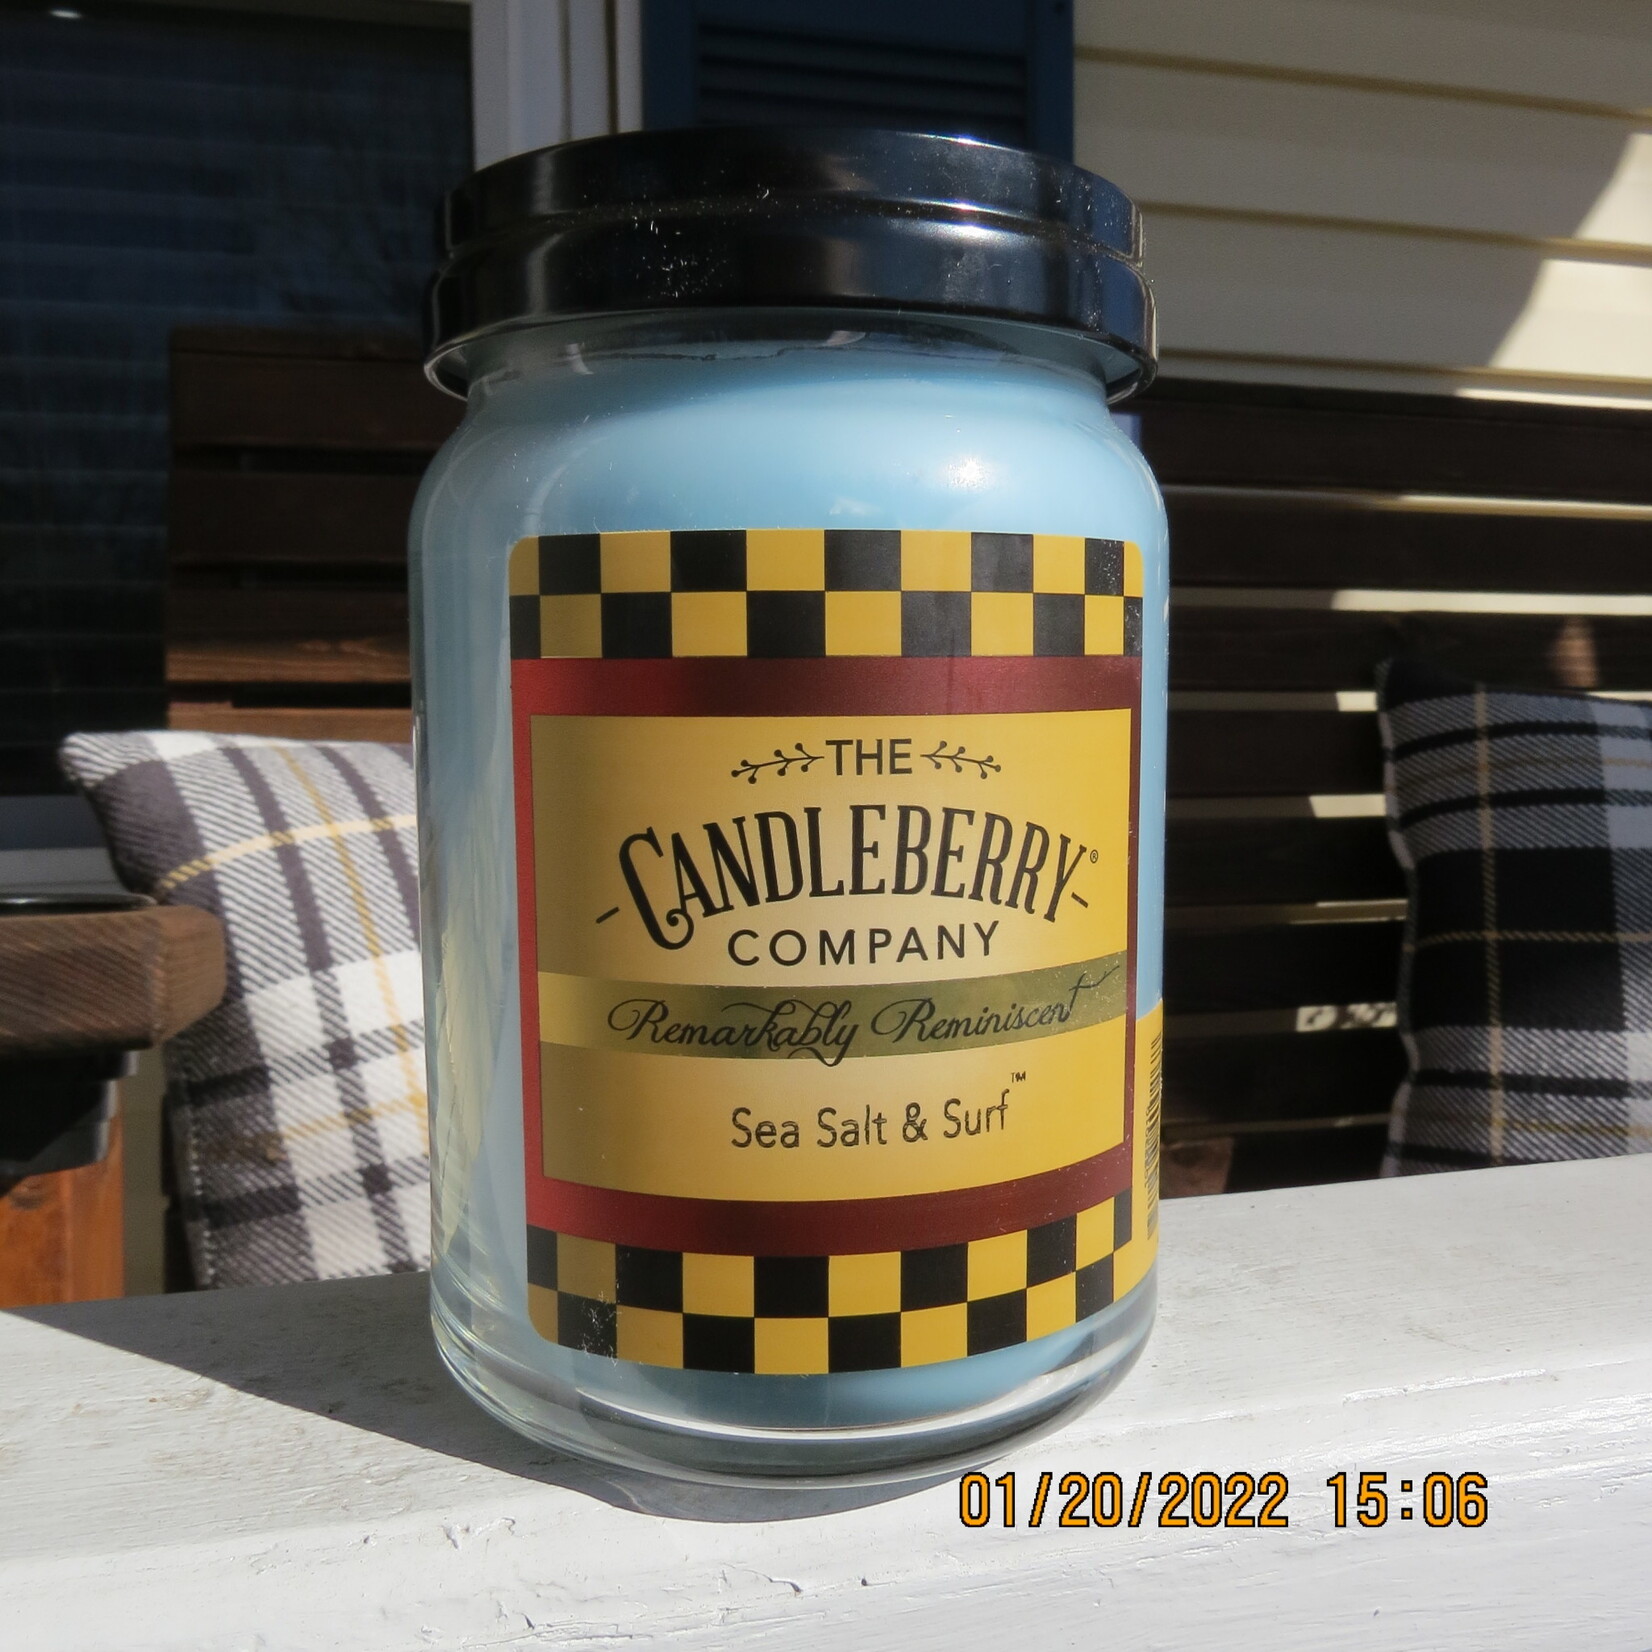 Candleberry Large Sea Salt & Turf Candle